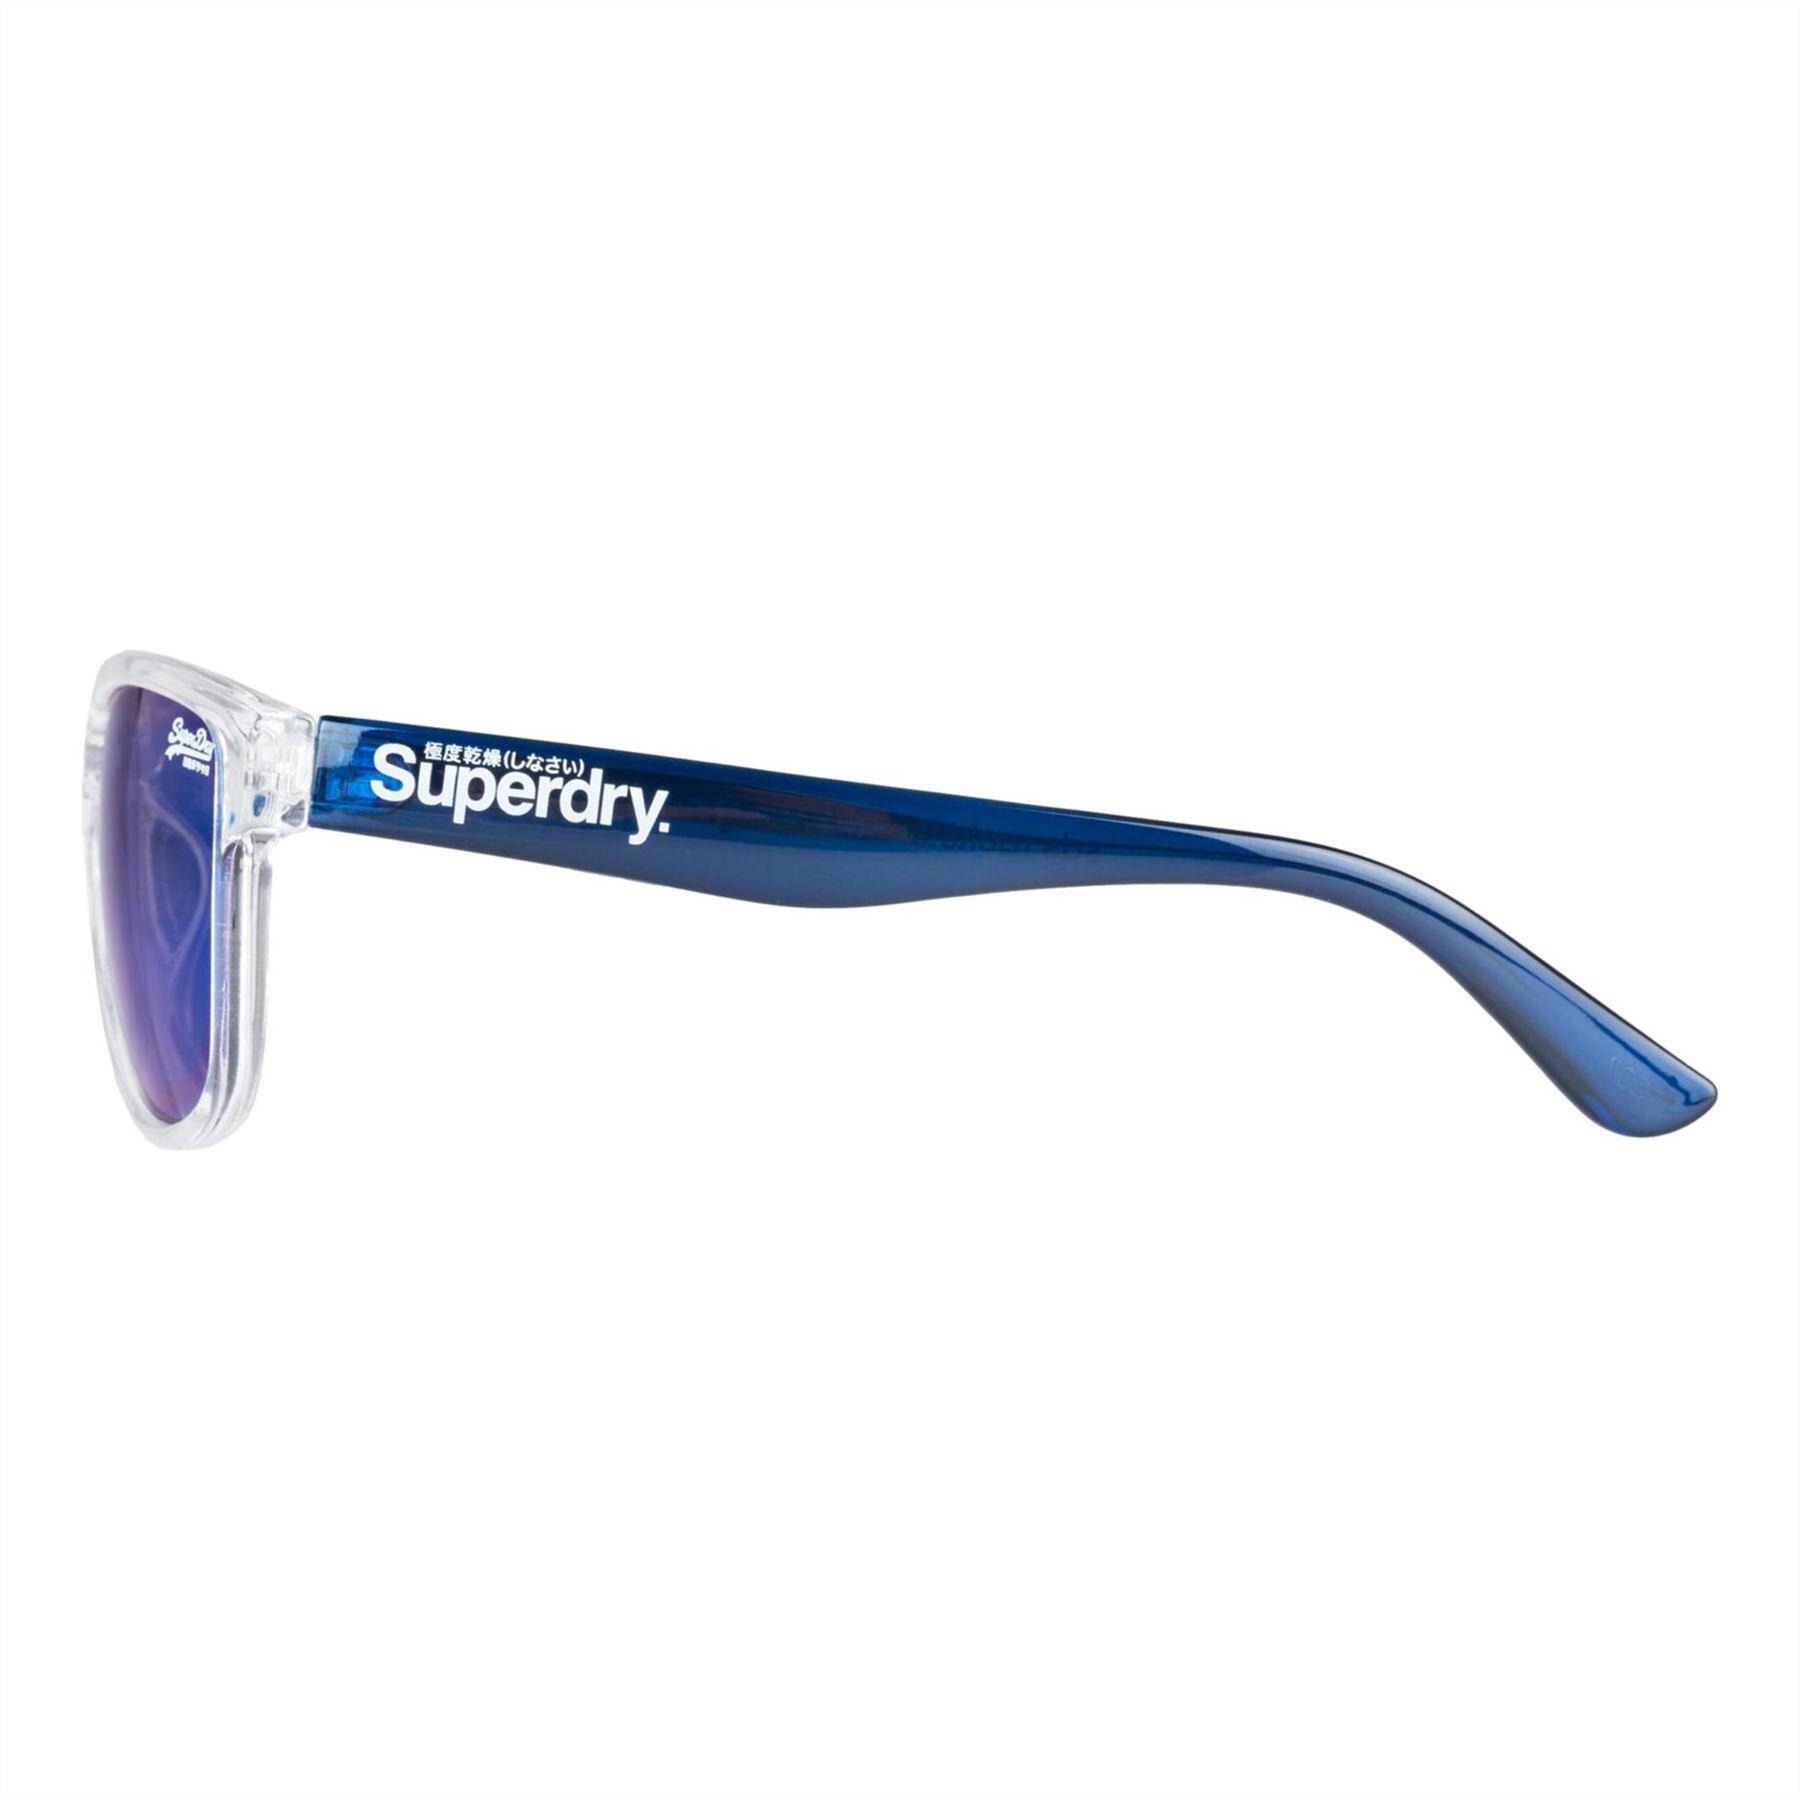 SUPERDRY Superdry SDS Rockstar Sunglasses - Clear Blue